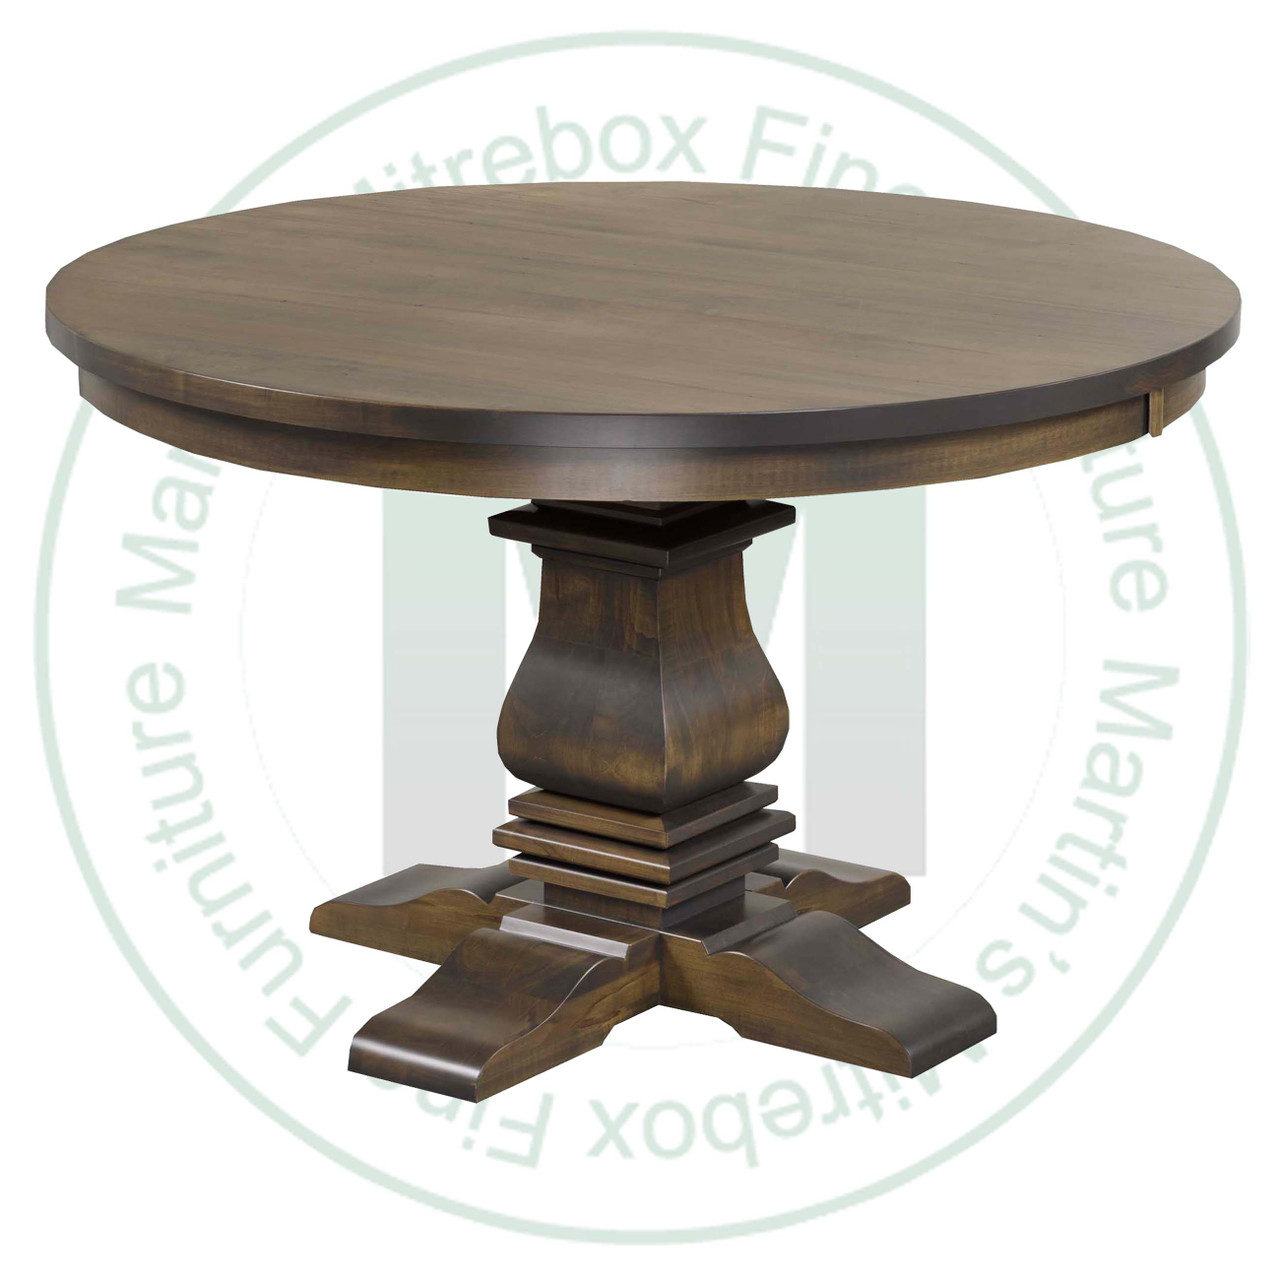 Oak Spartan Collection Single Pedestal Table 42''D x 42''W x 30''H. Table Has 1'' Thick Top